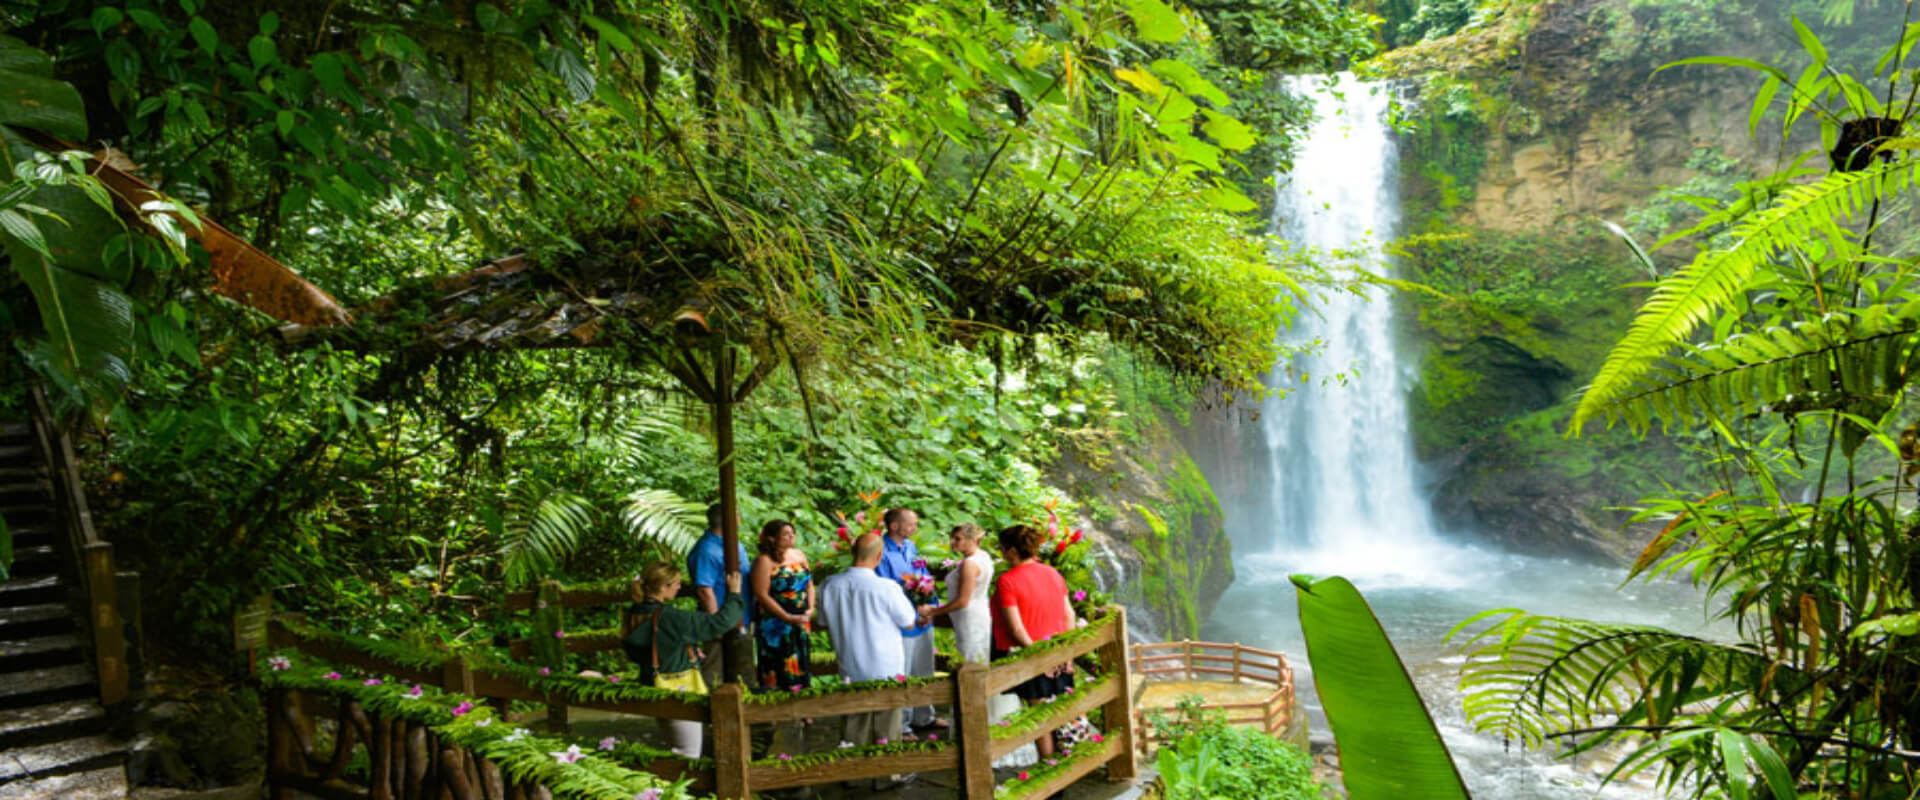 Combo Tour: Poás Volcano National Park / Doka Coffee Tour / La Paz Waterfall Garden | Costa Rica Jade Tours